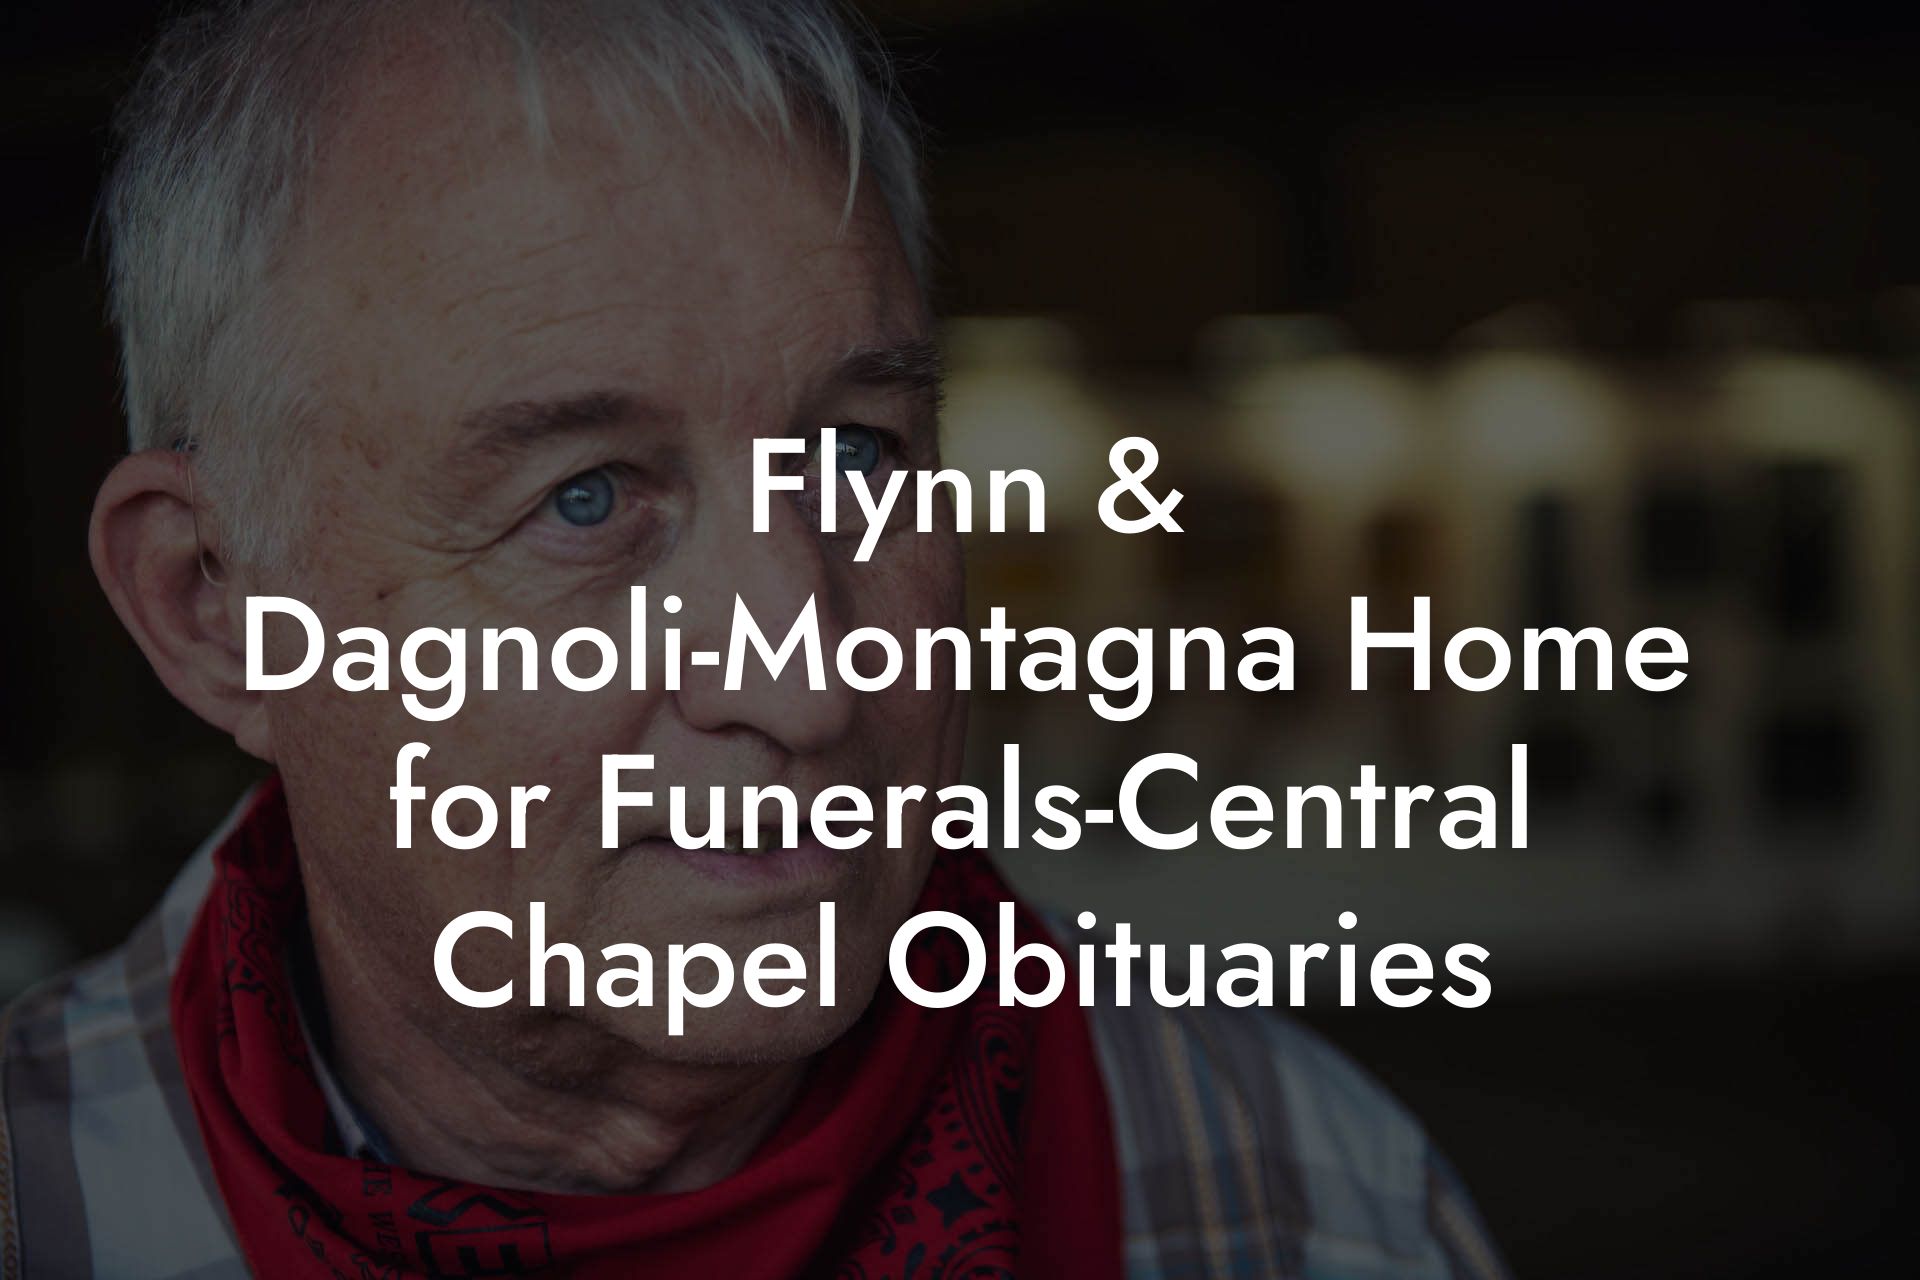 Flynn & Dagnoli-Montagna Home for Funerals-Central Chapel Obituaries